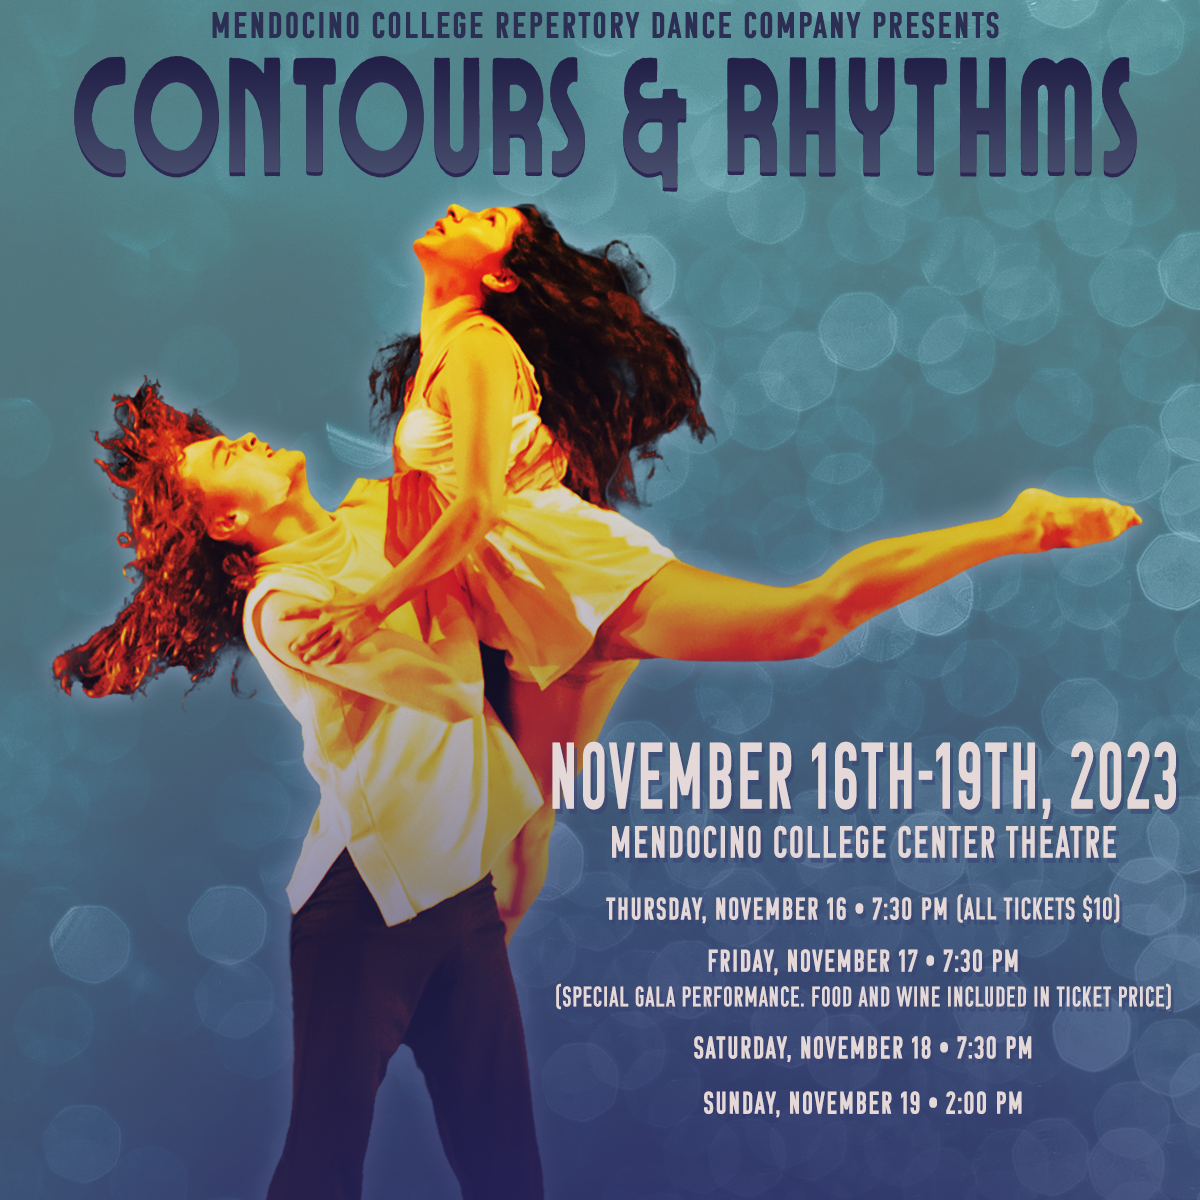 Contours & Rhythms